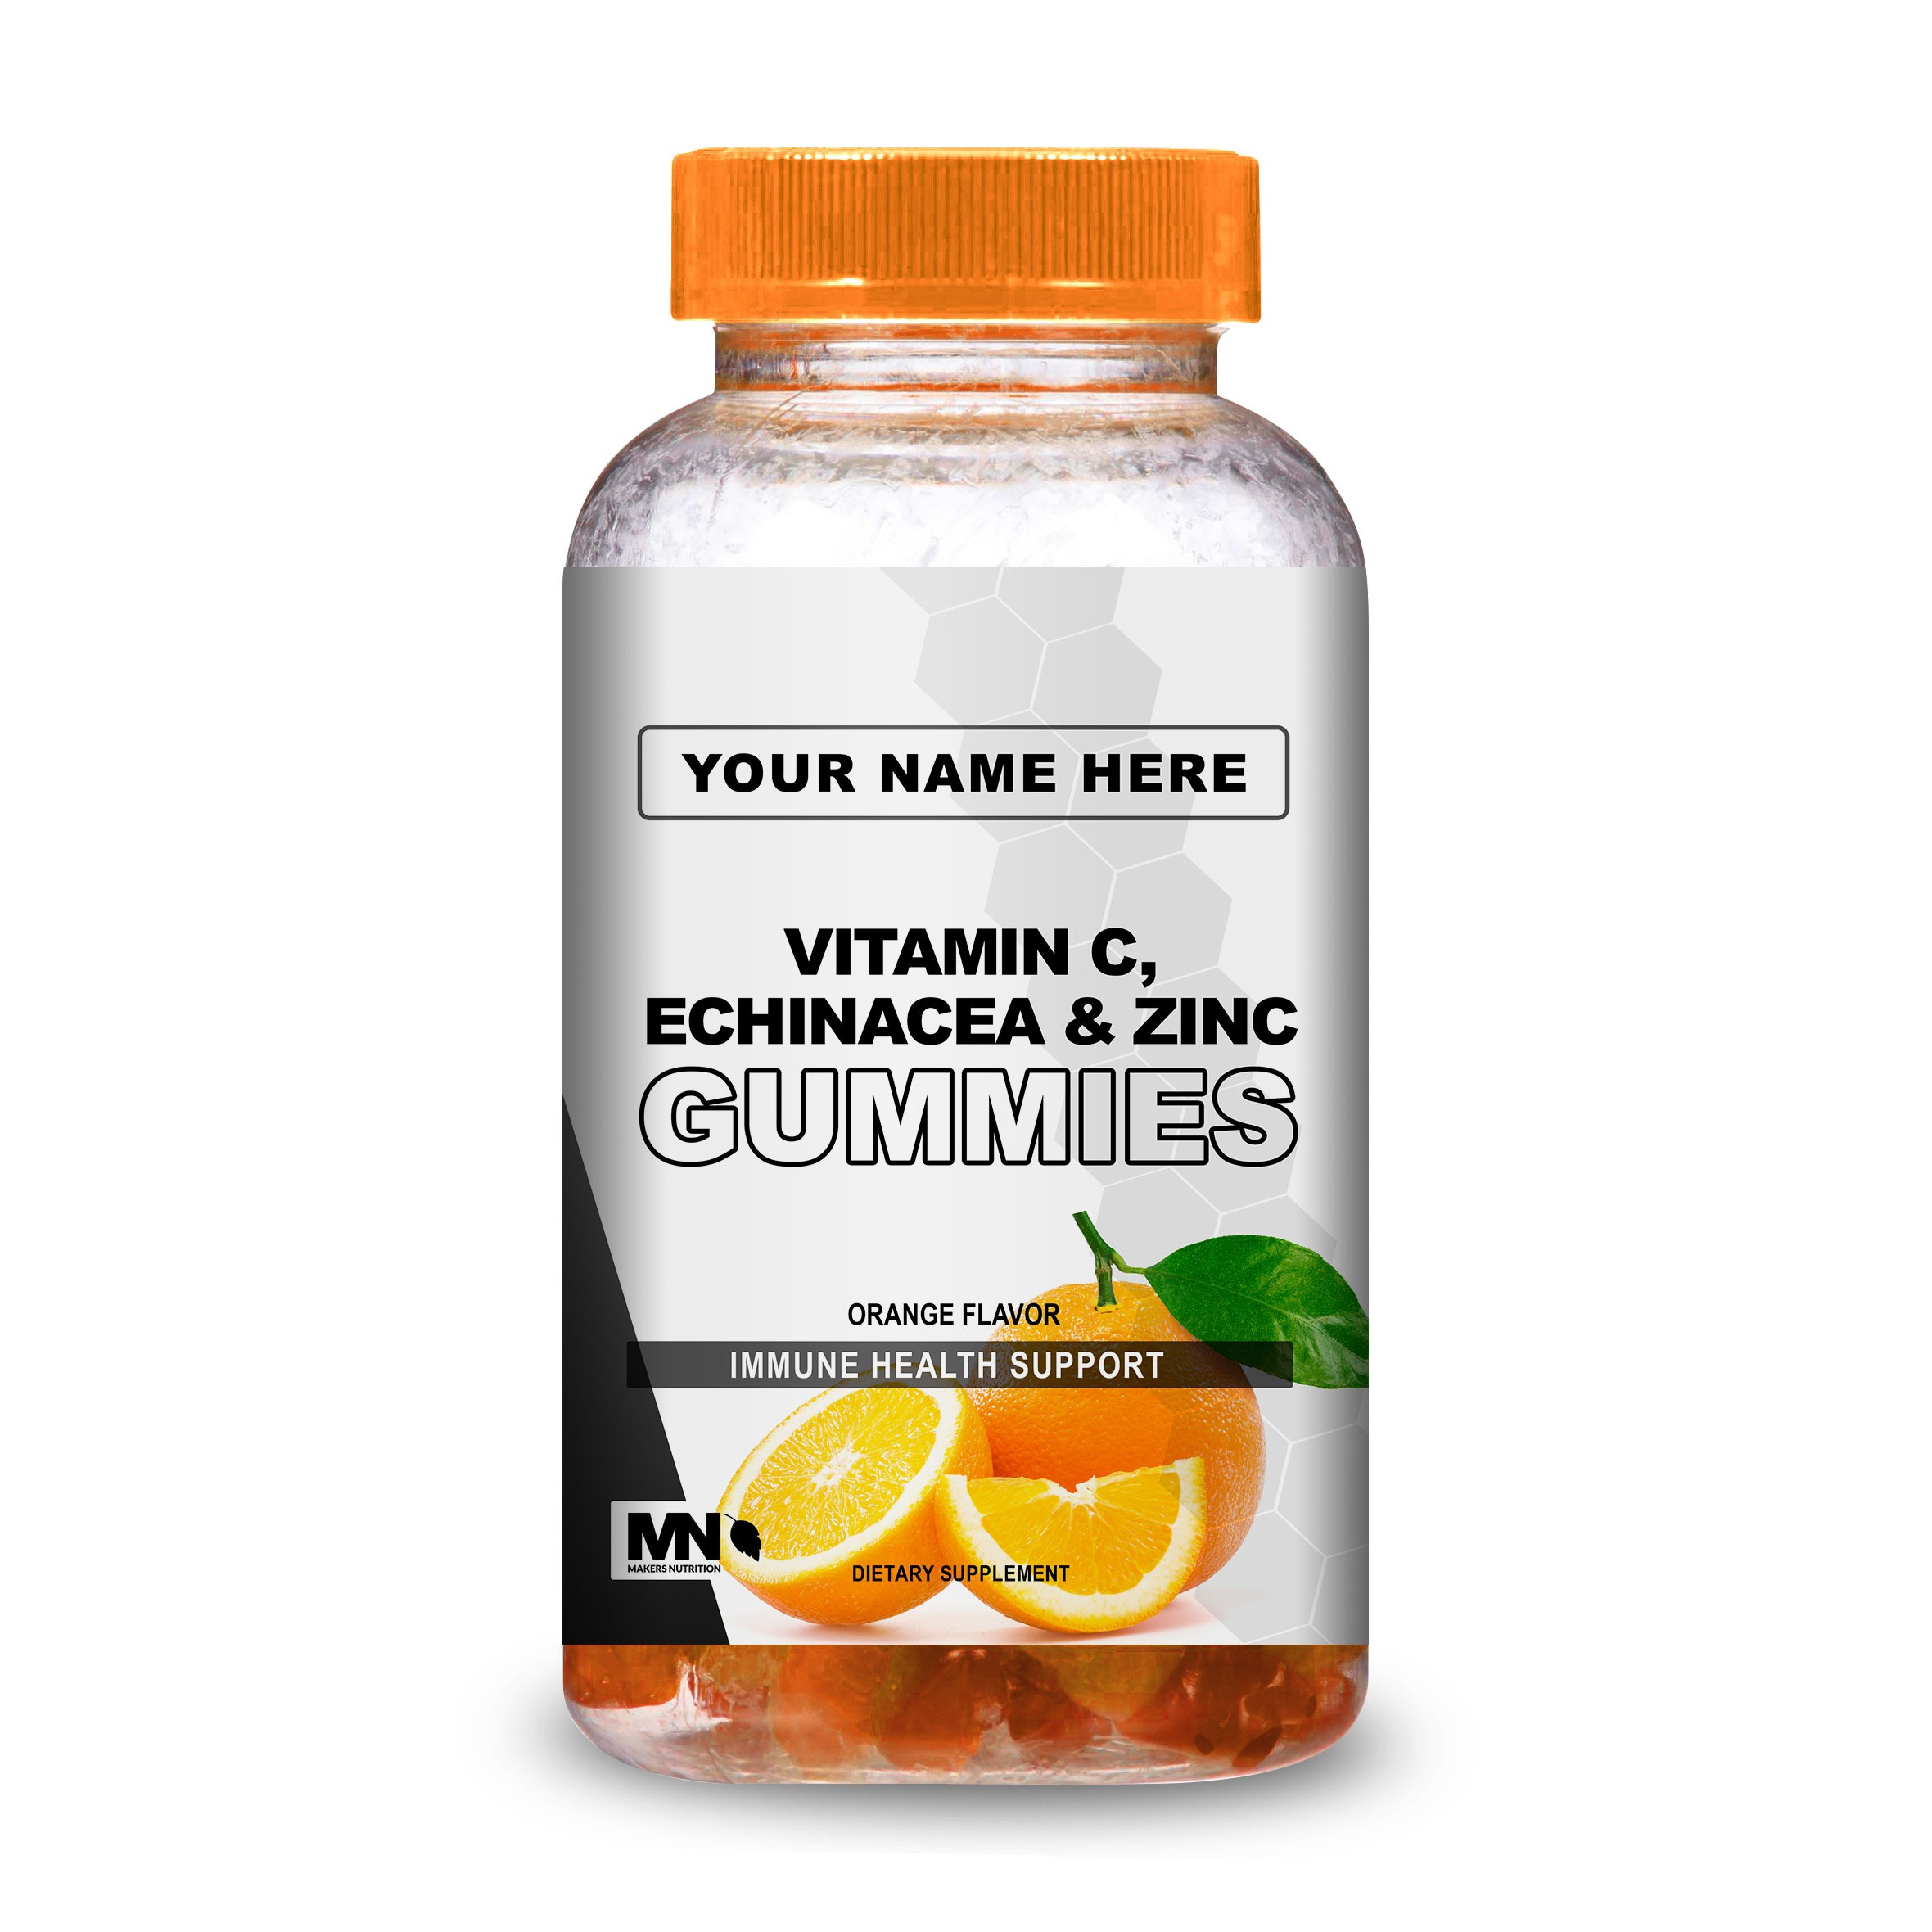 Vitamin C, Echinacea, and Zinc Gummies